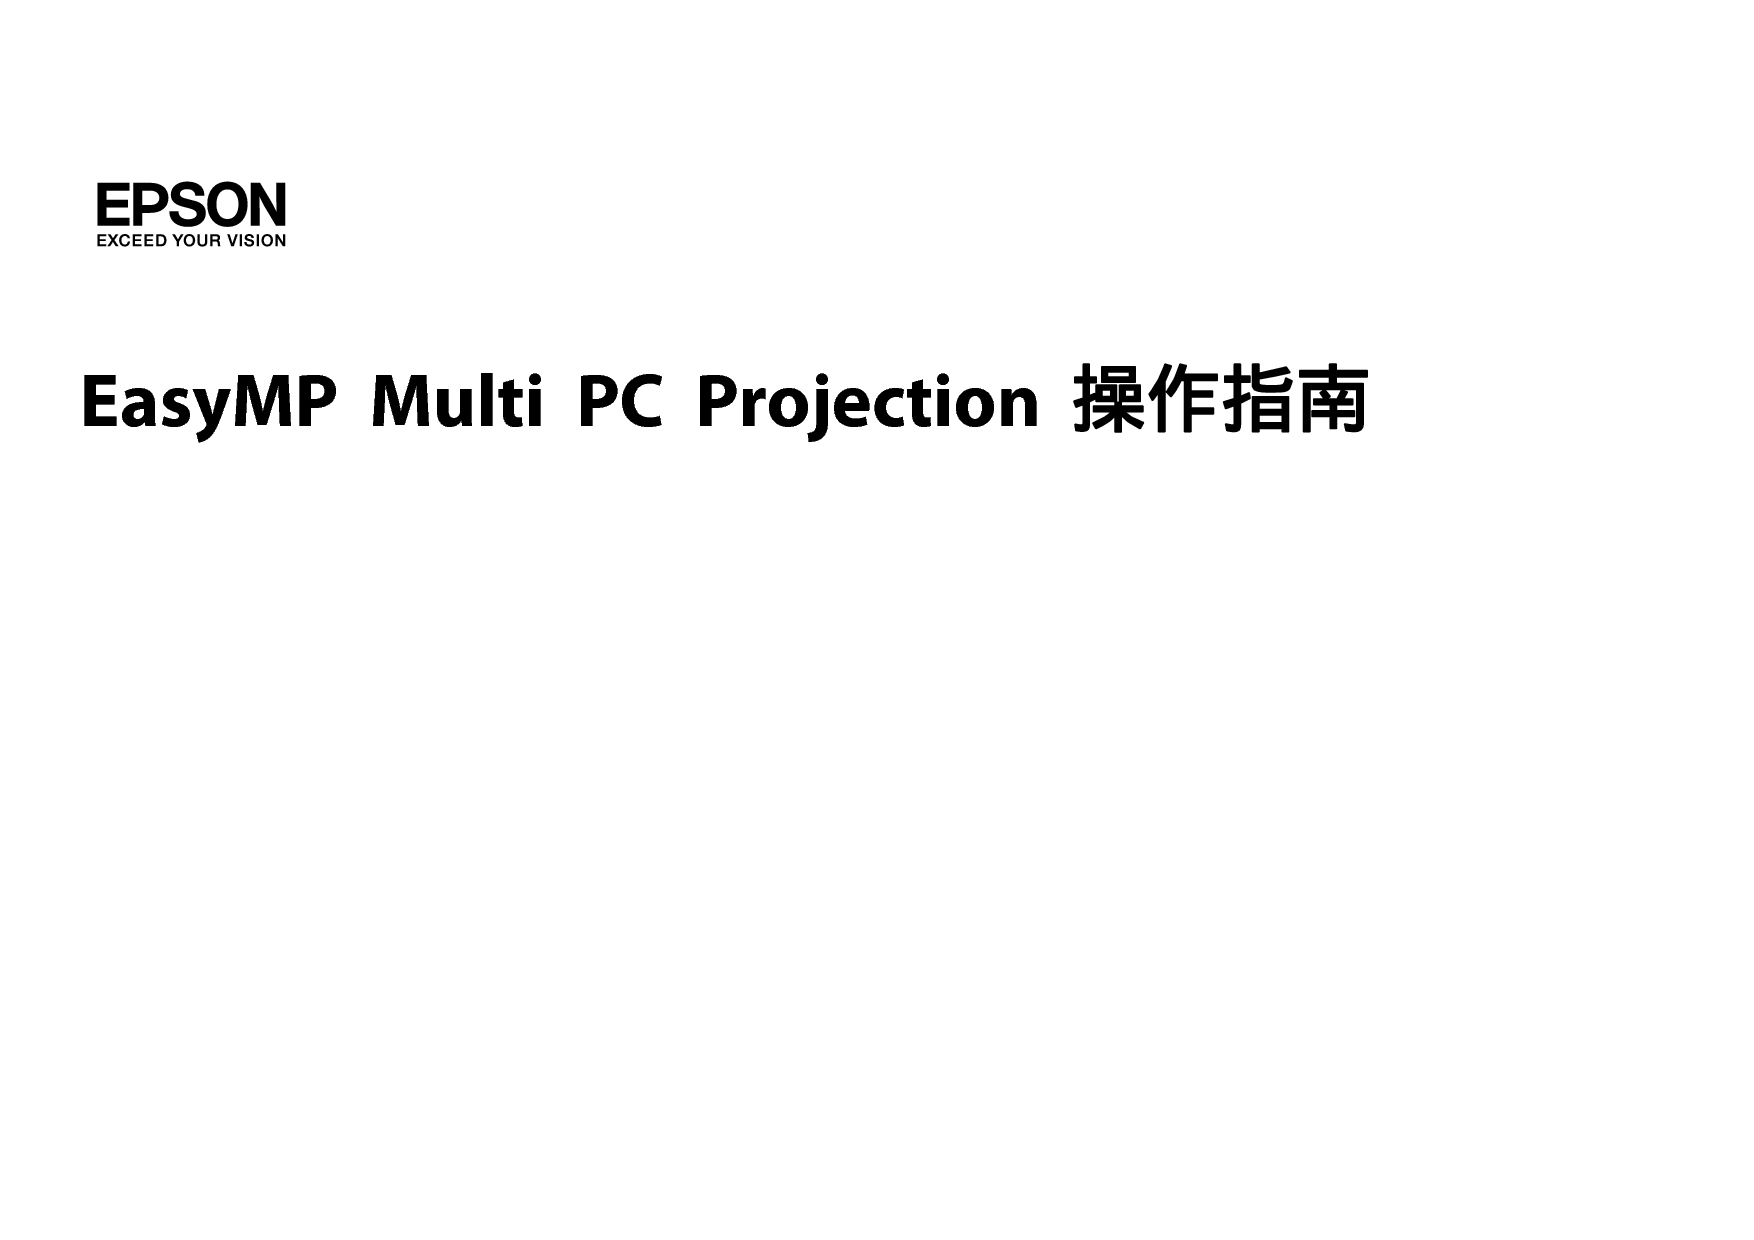 爱普生 Epson EASYMP MULTI PC PROJECTION 操作指南 封面